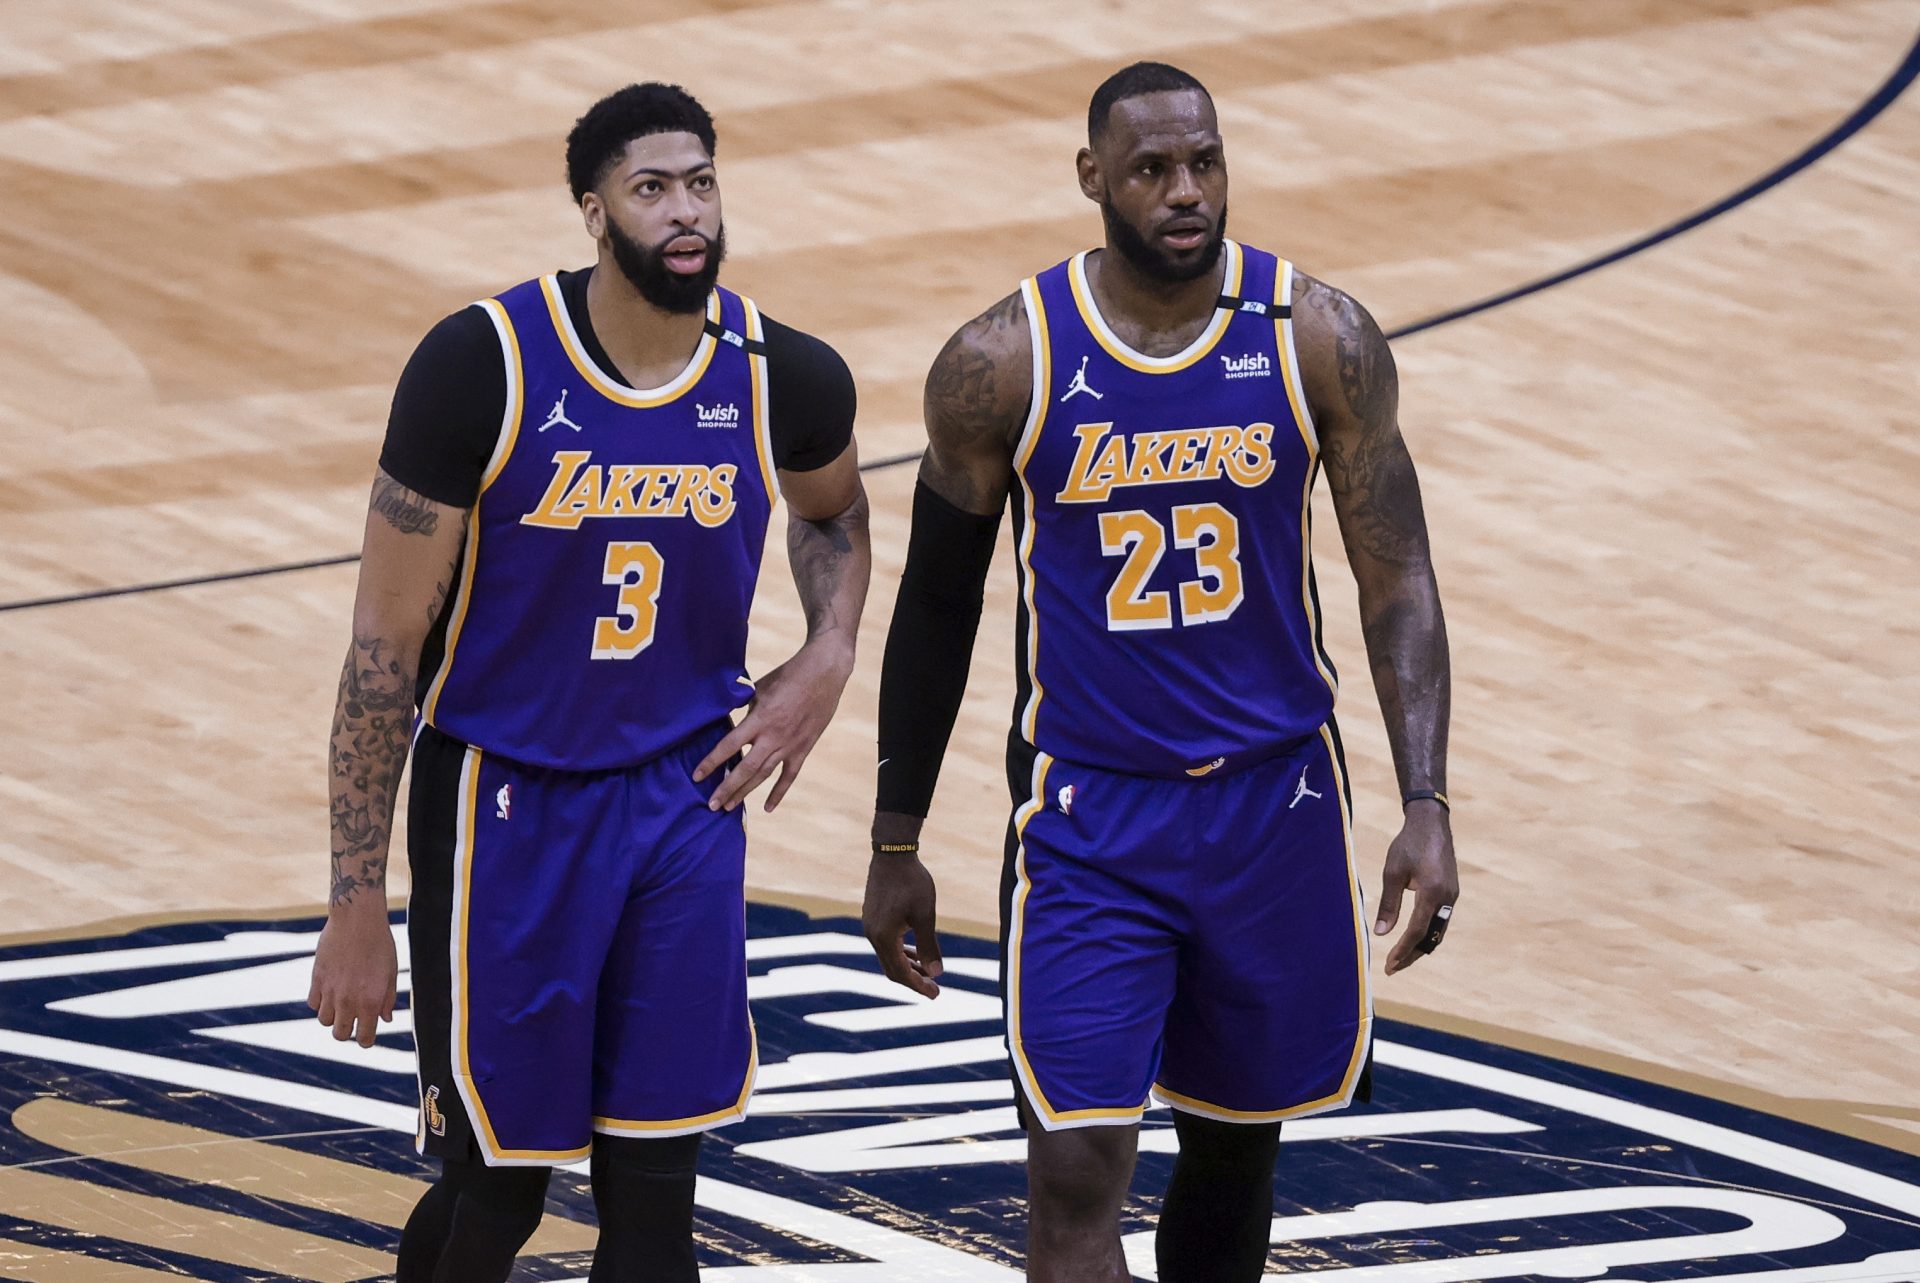 Lakers’ 2021 NBA Preseason Agenda Released; Opener Space for Oct. 3 vs. Nets